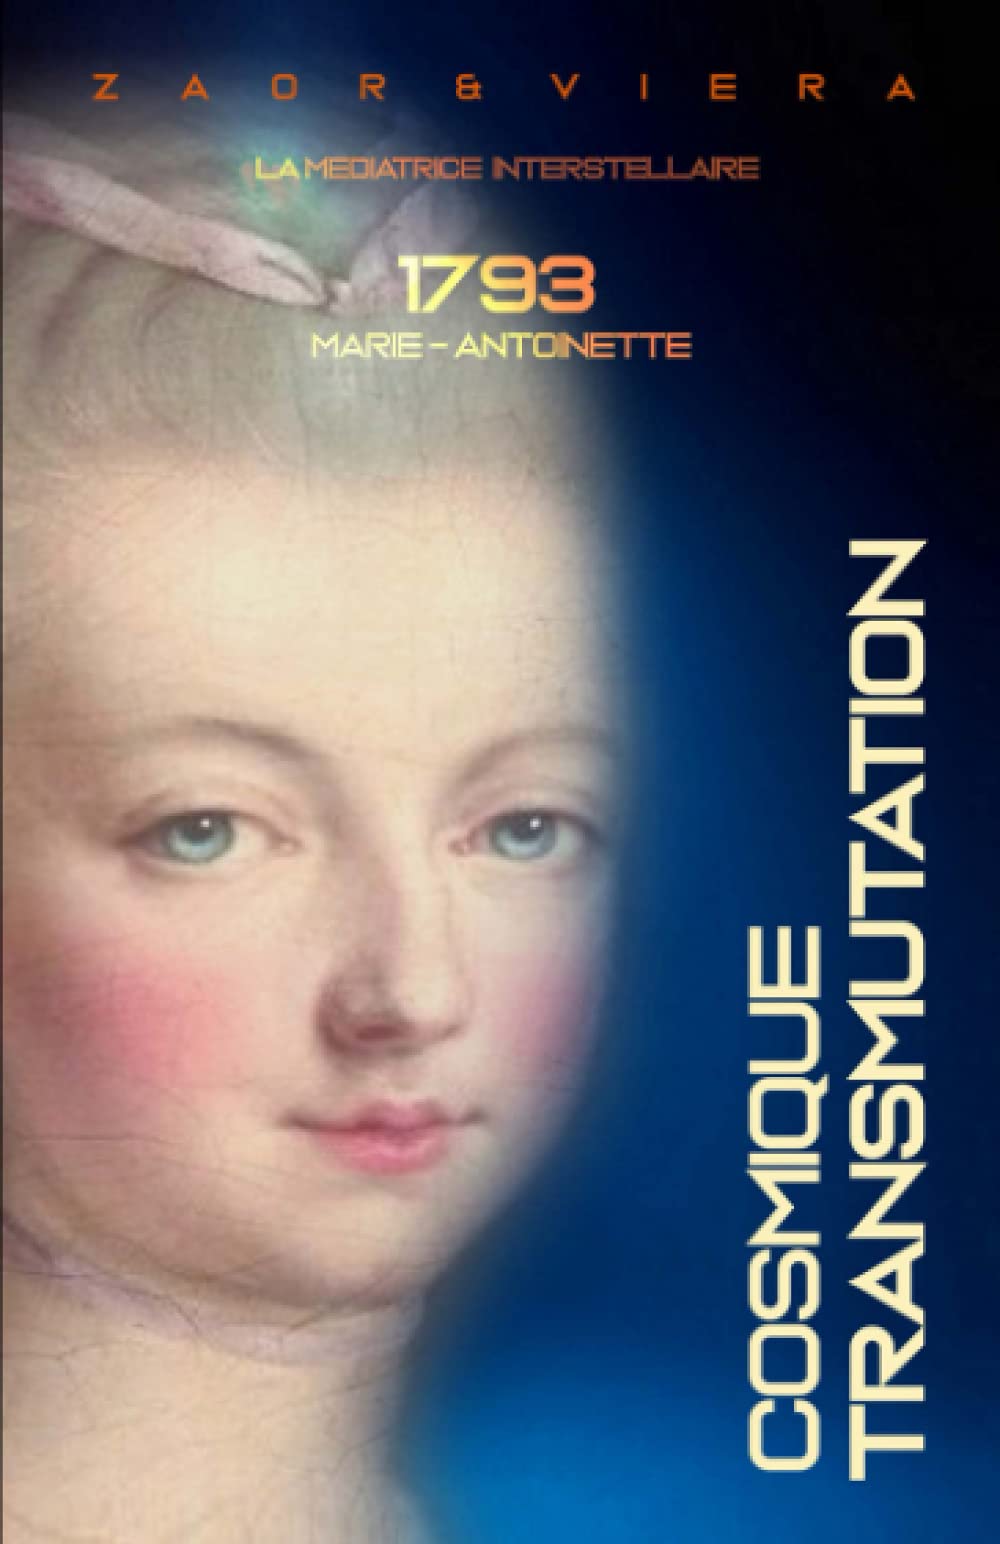 1793, Marie-Antoinette transmutation cosmique 61mtnv10